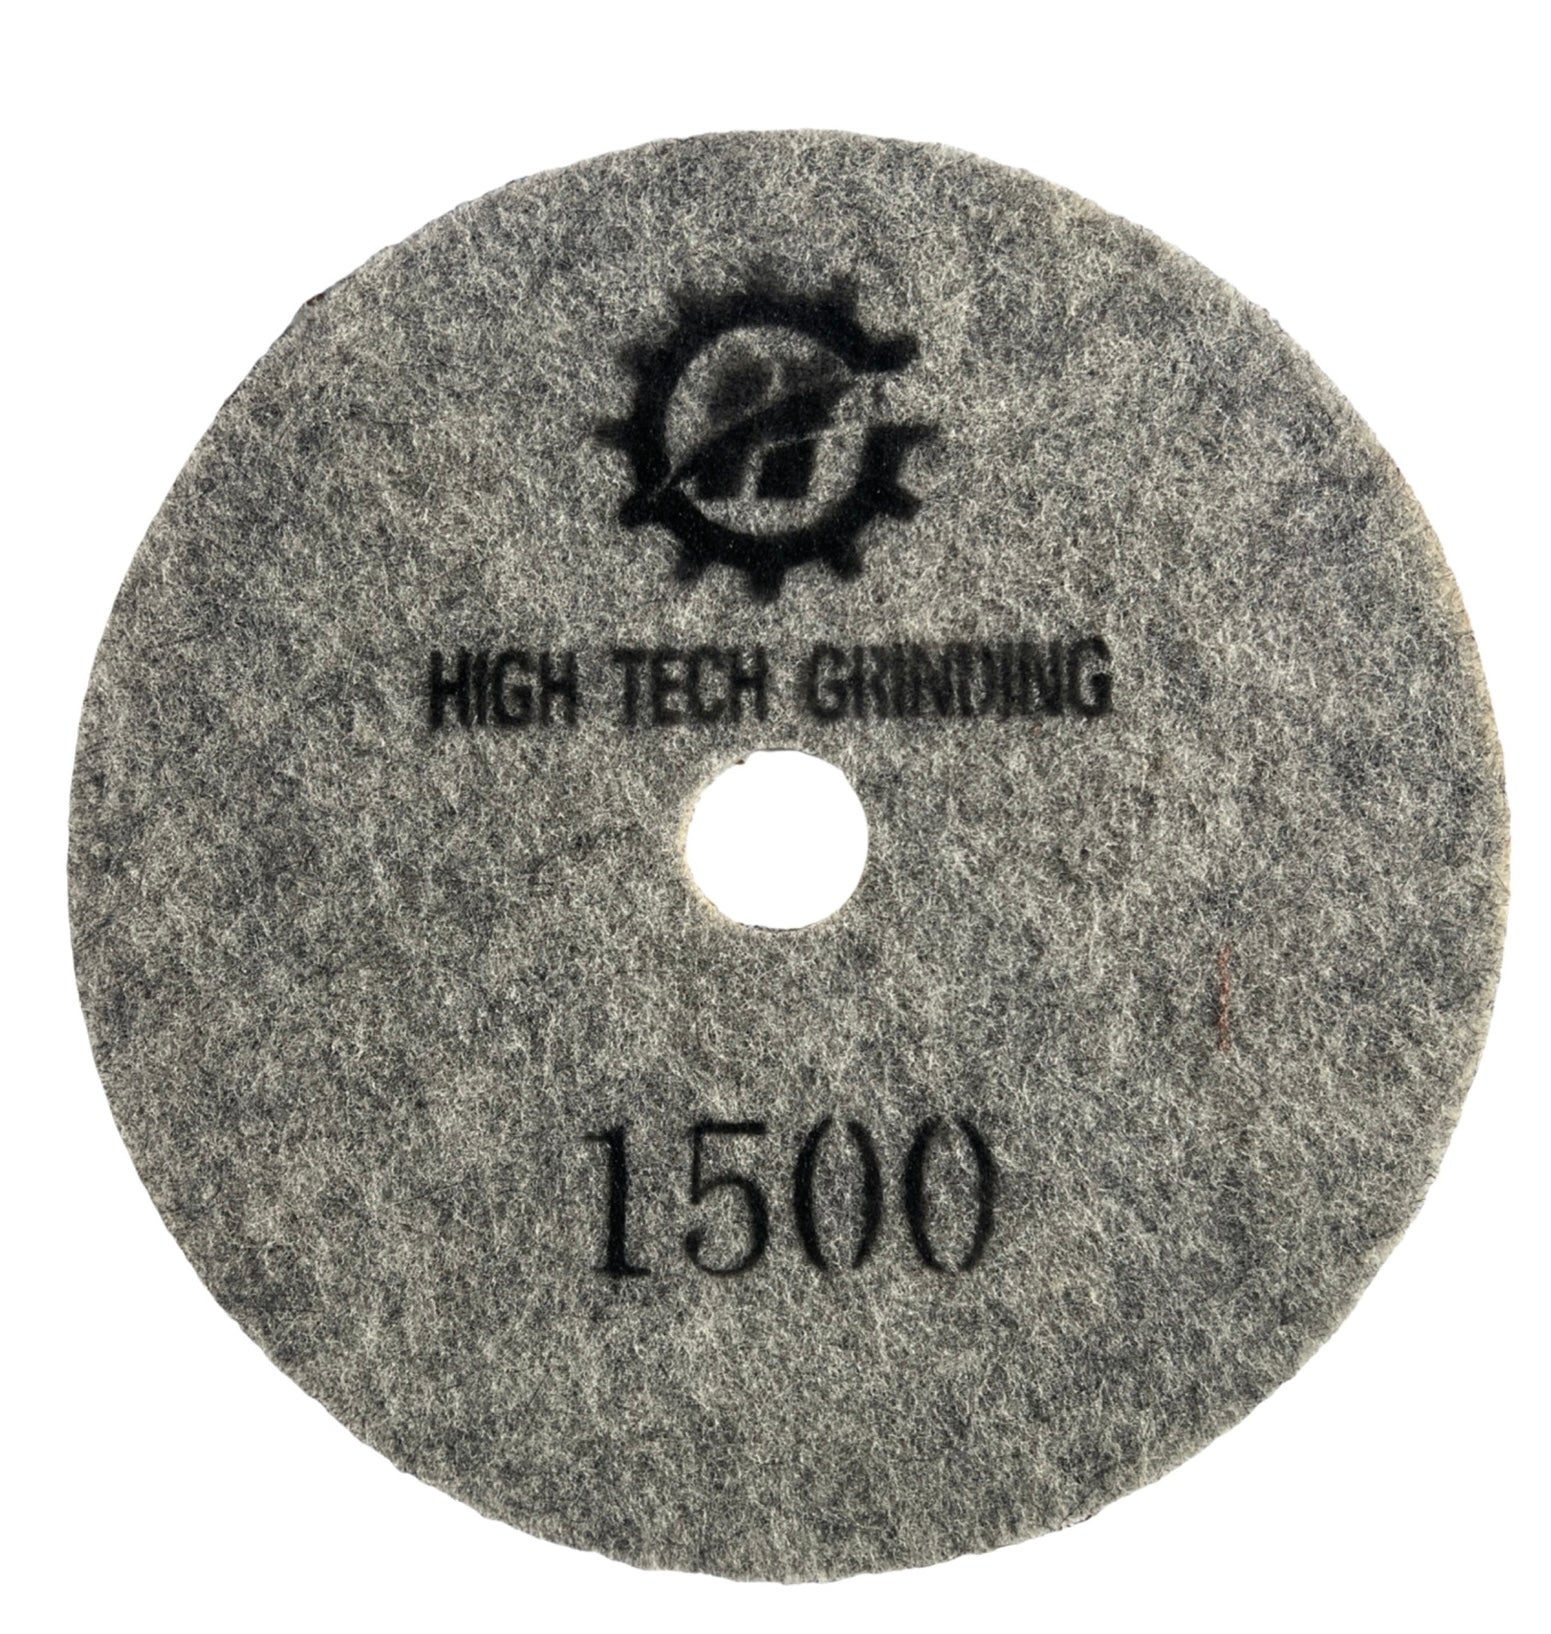 Resin Dipped high speed polishing burnishing pad - Hightech-Grinding Canada